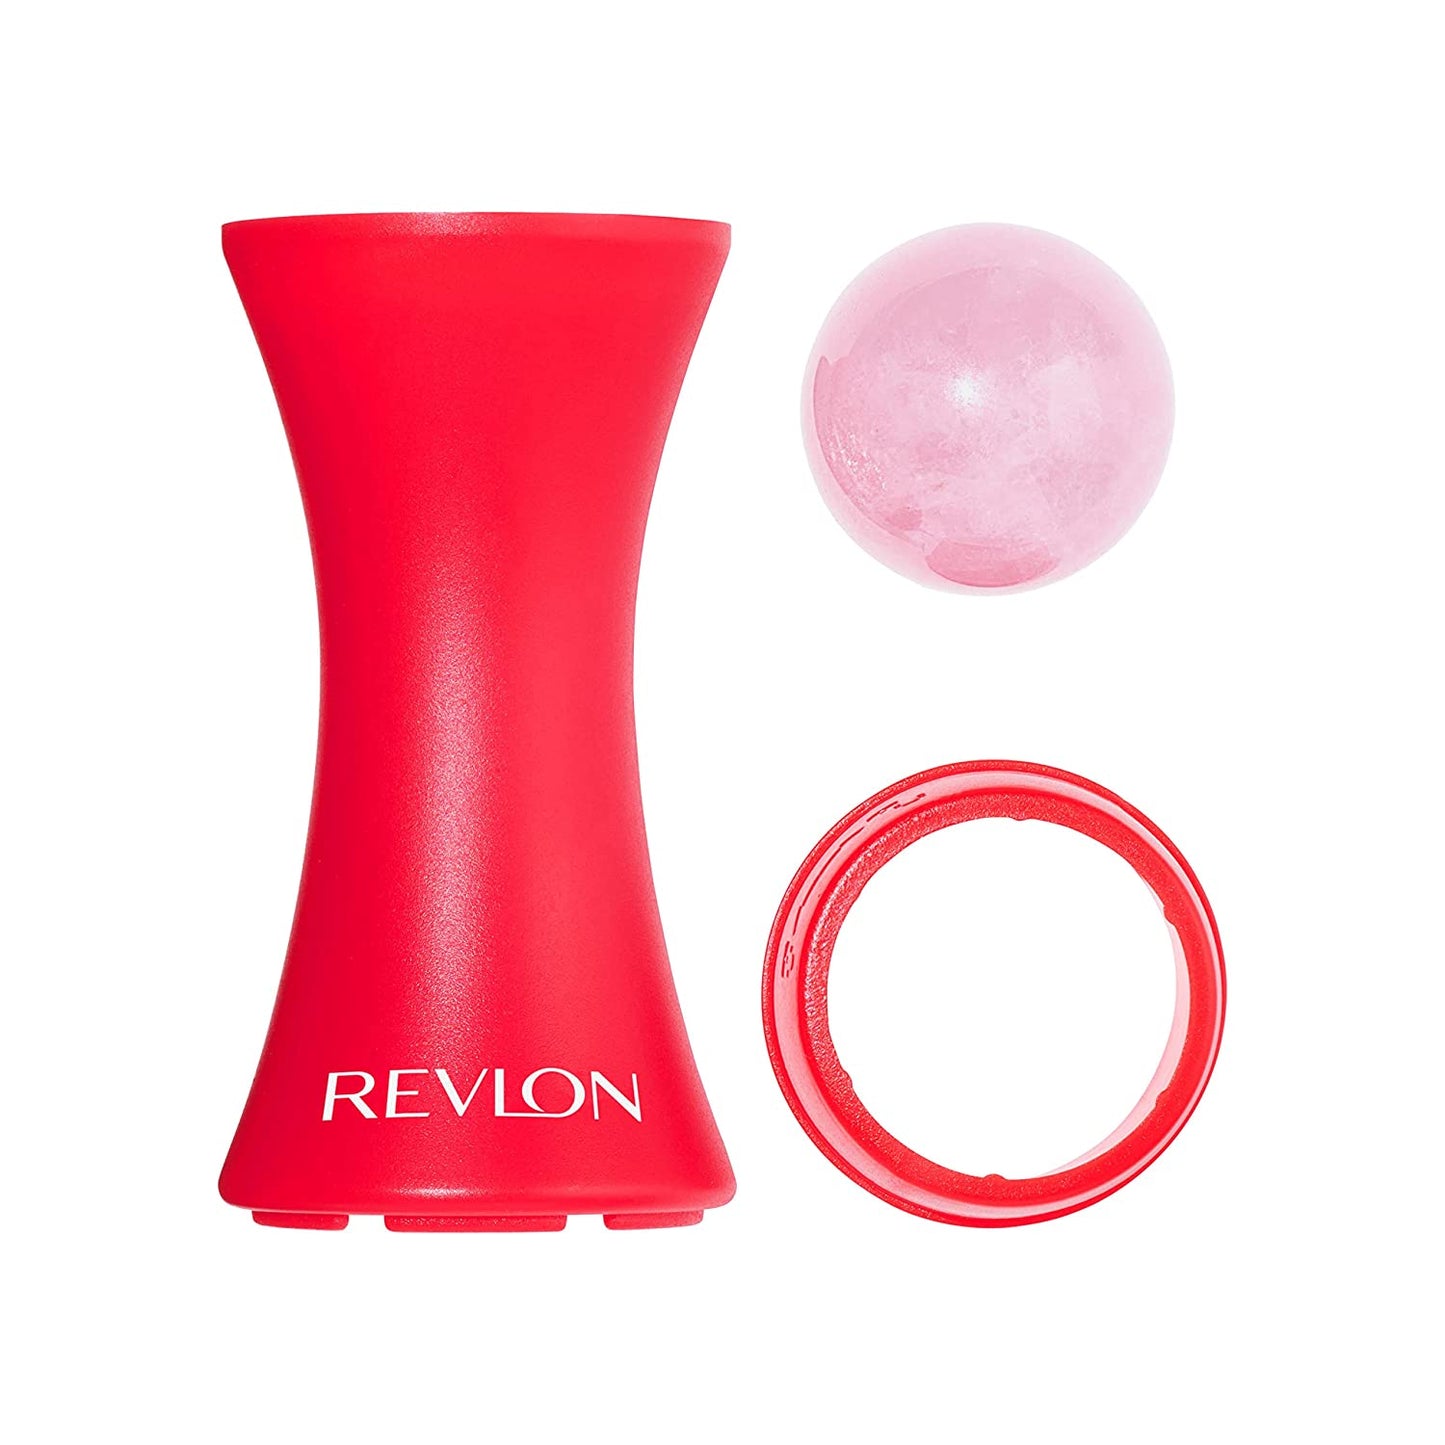 Revlon Skin Reviving Roller with Rose Quartz for All-Day Facial Reviving & Brightening